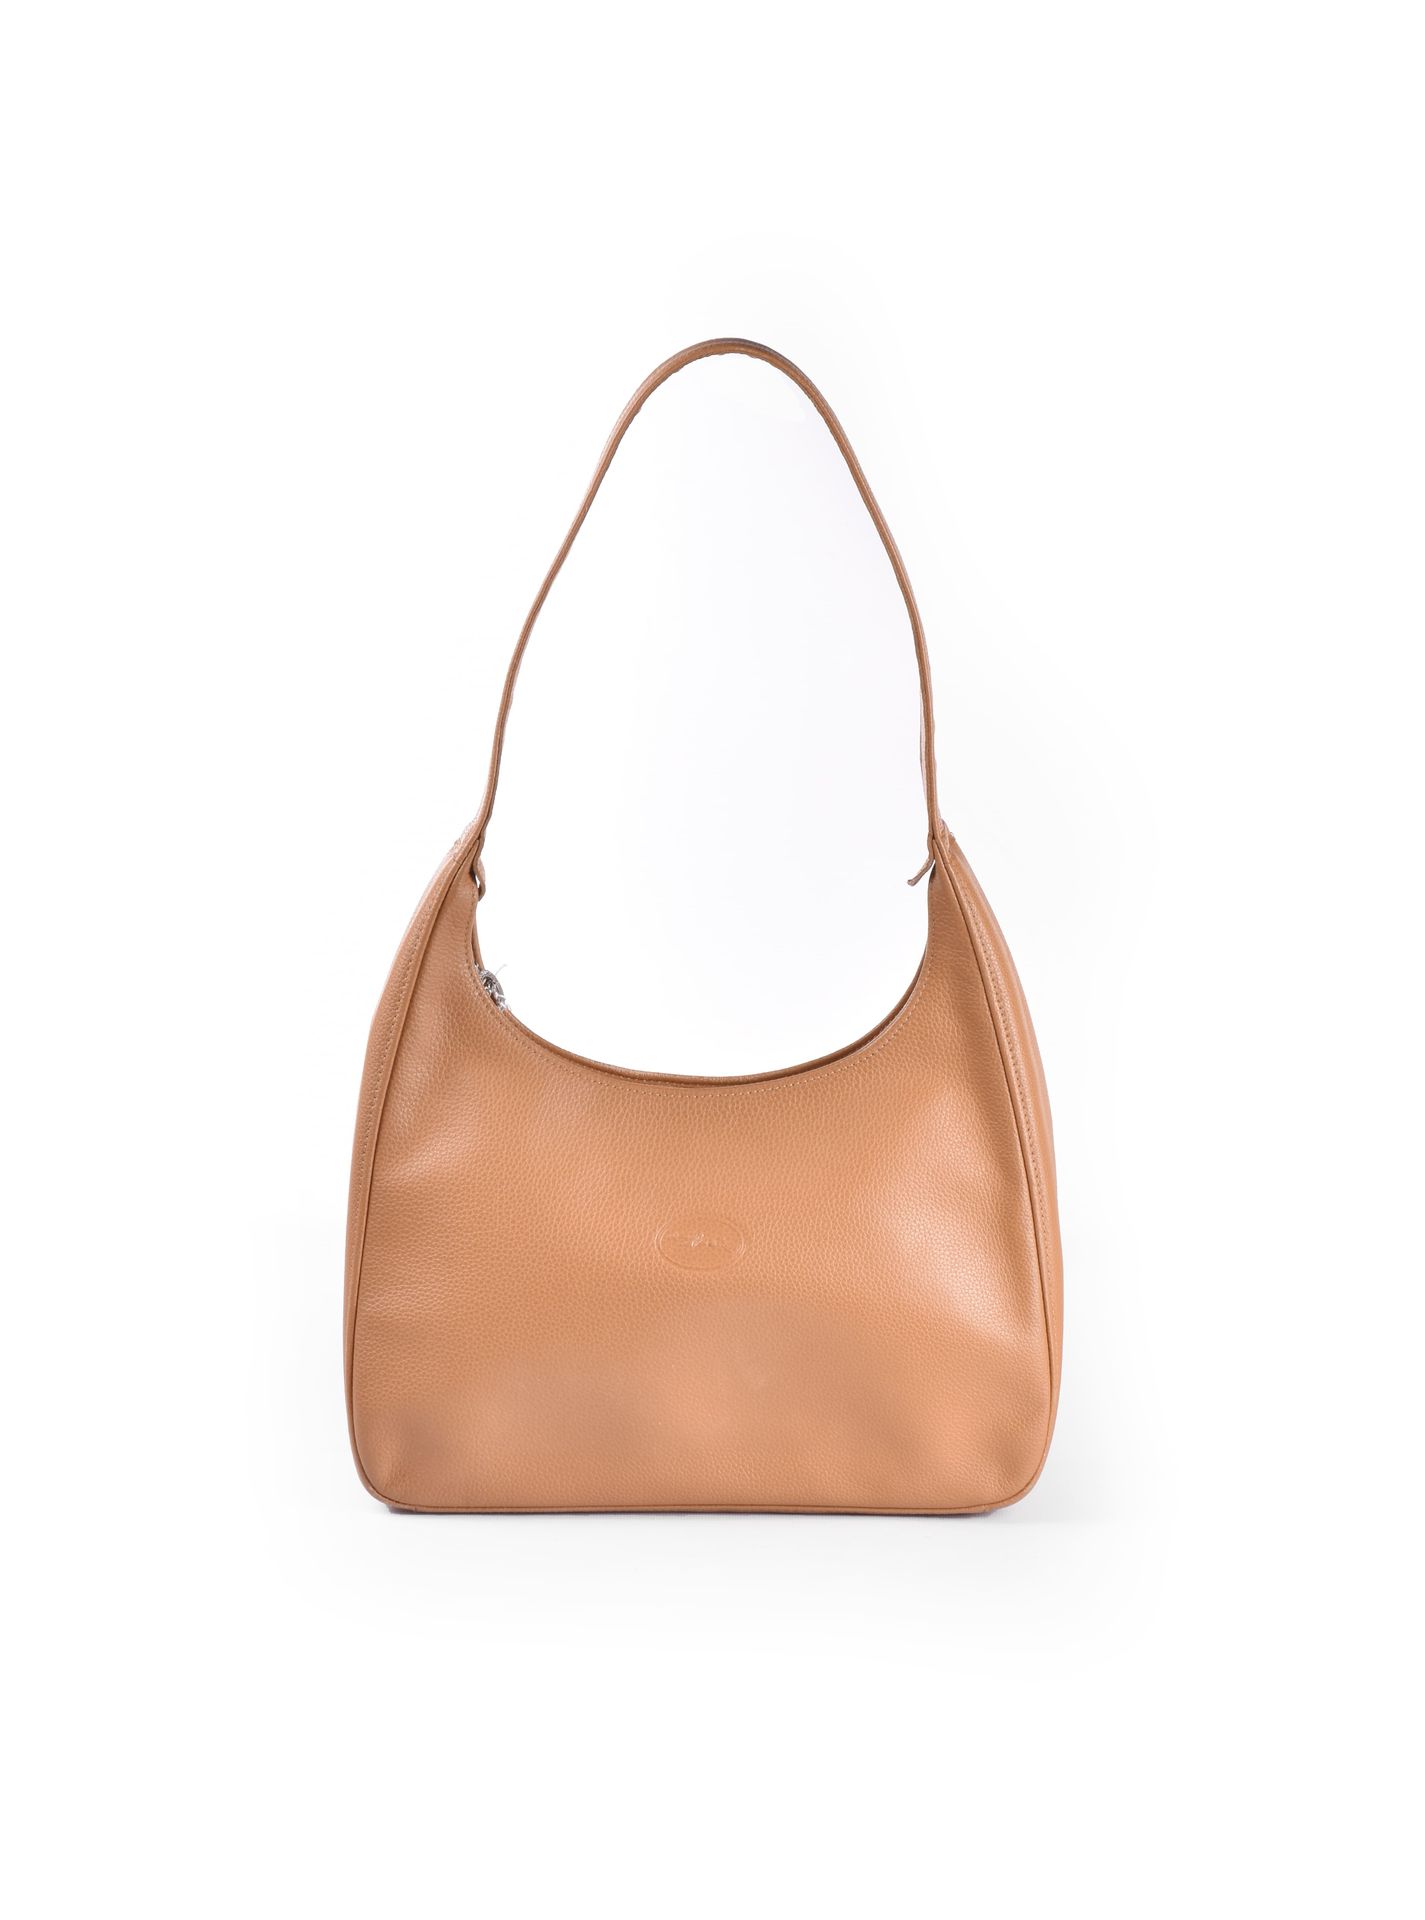 LONGCHAMP Shoulder bag.
Camel leather.
Very good condition.
Dustbag.
Ht: 30 cm -&hellip;